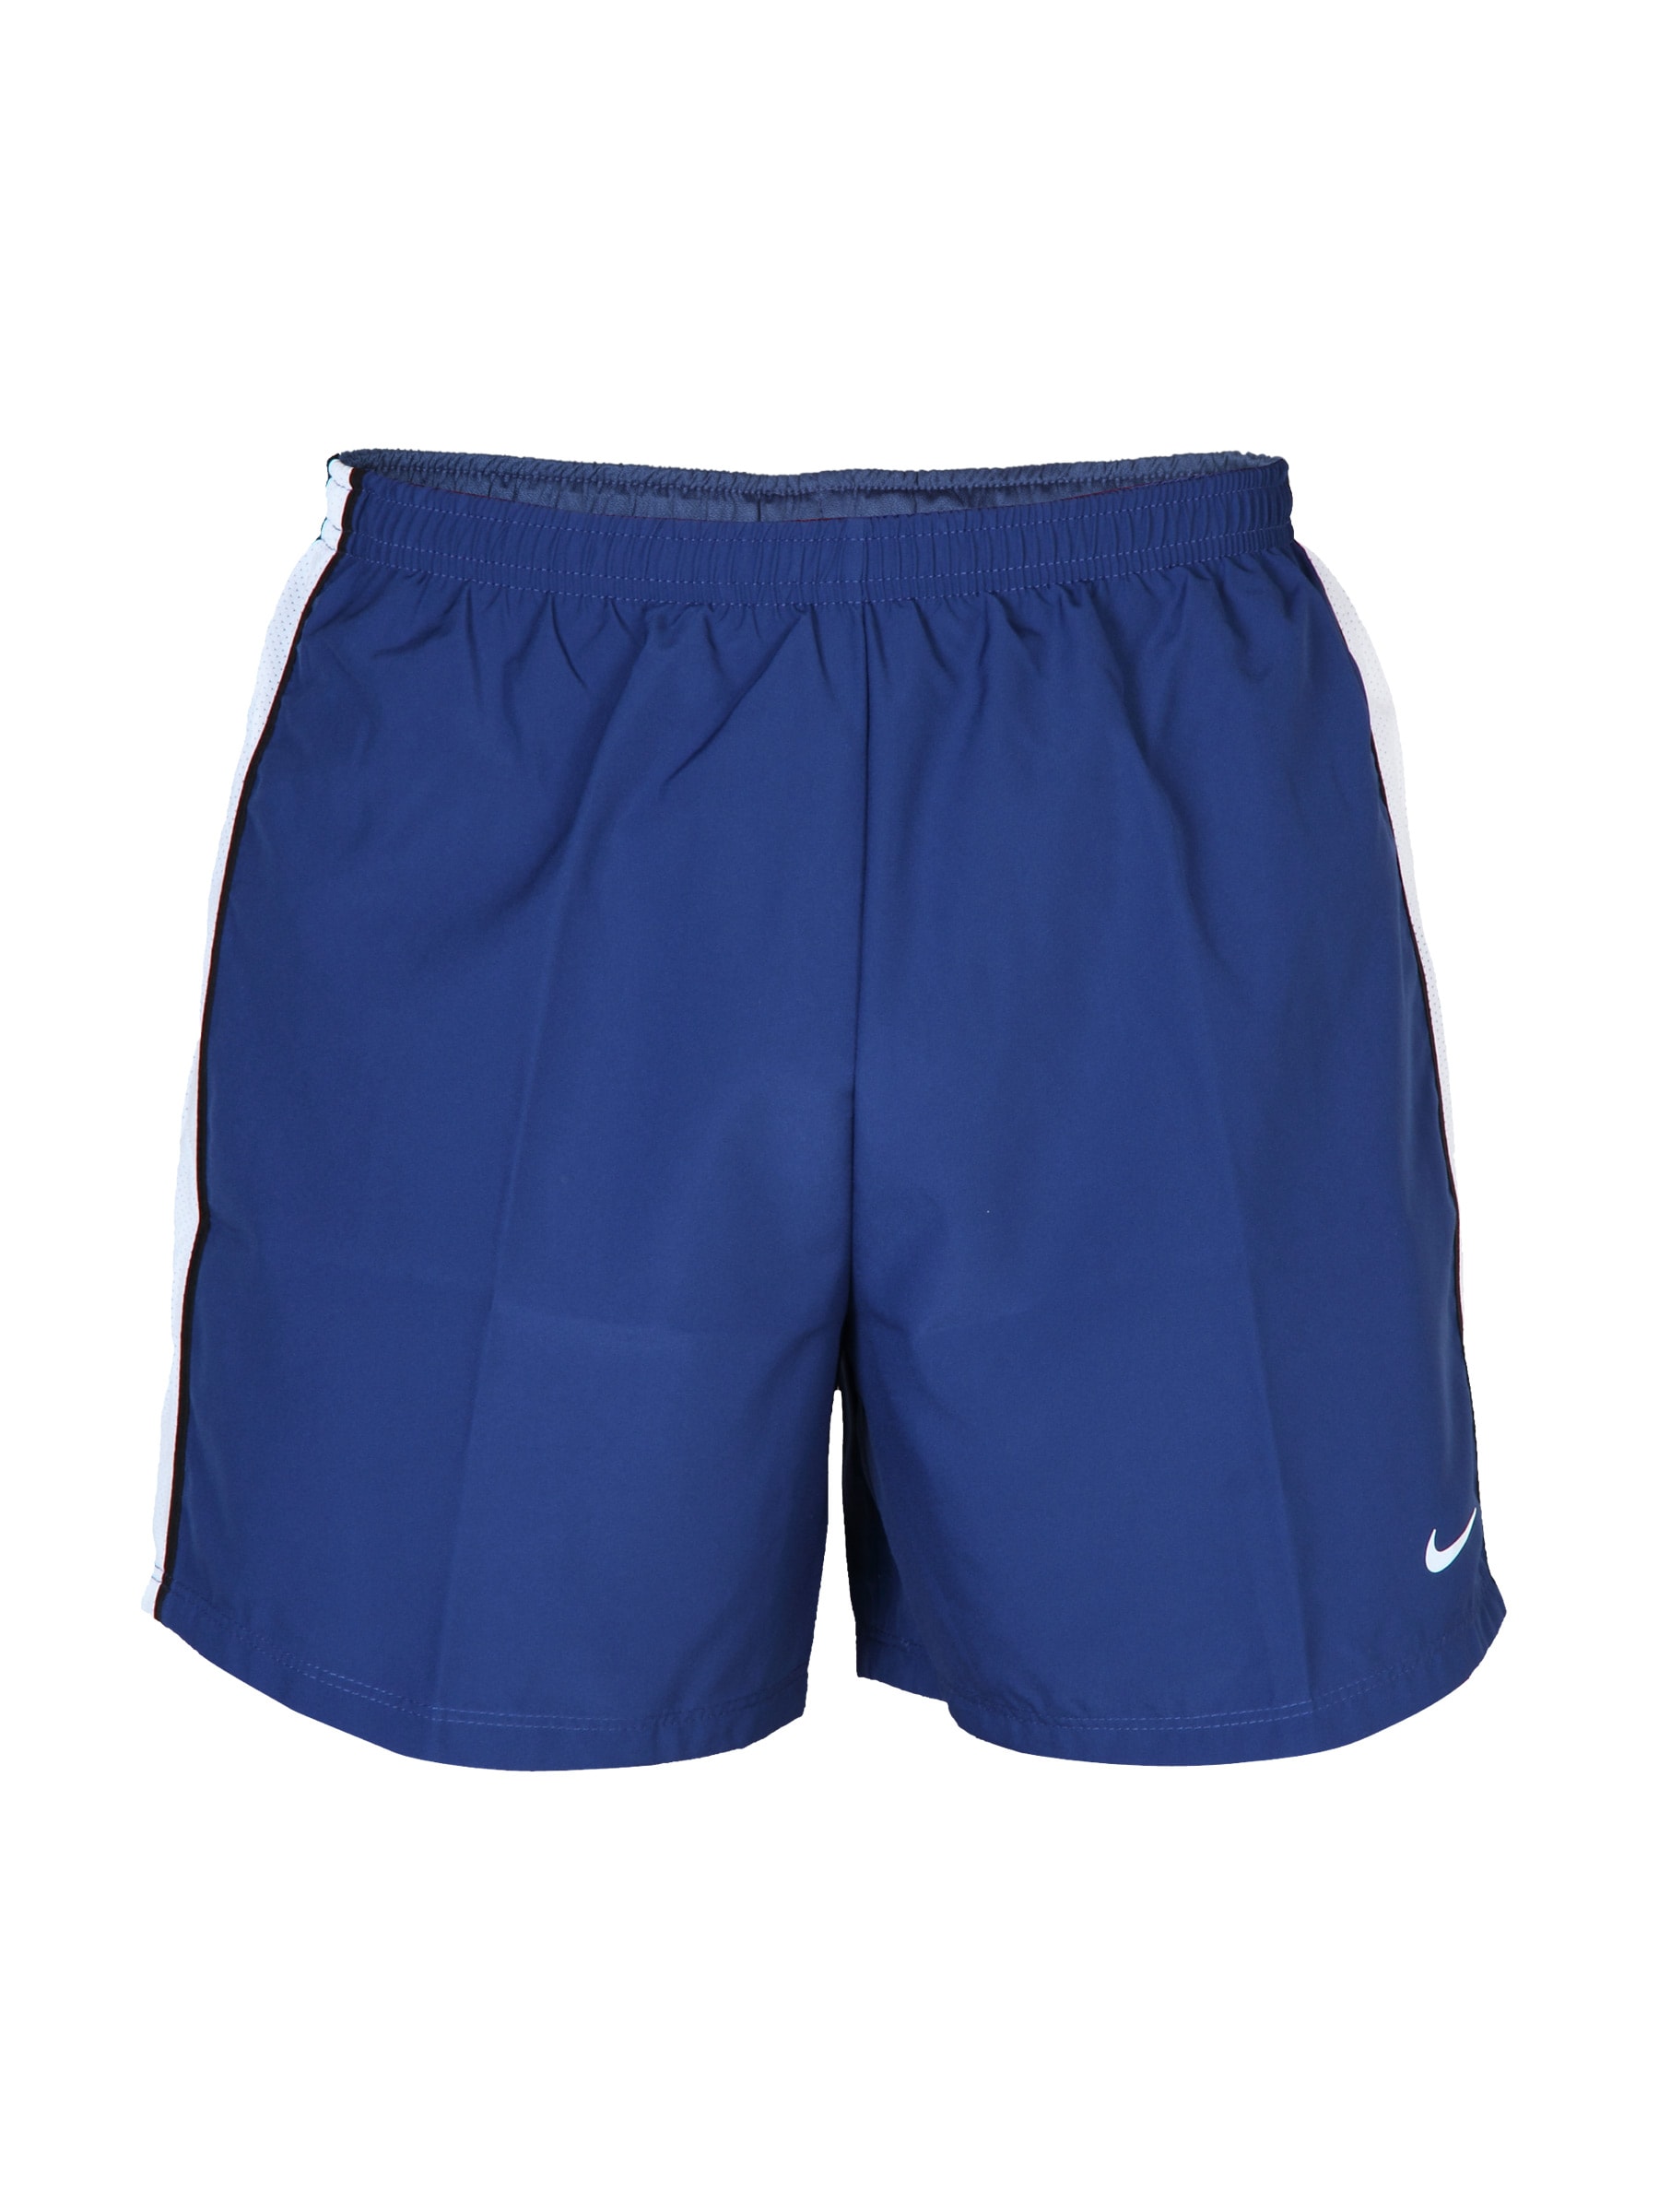 Nike Men's Tempo Blue Short